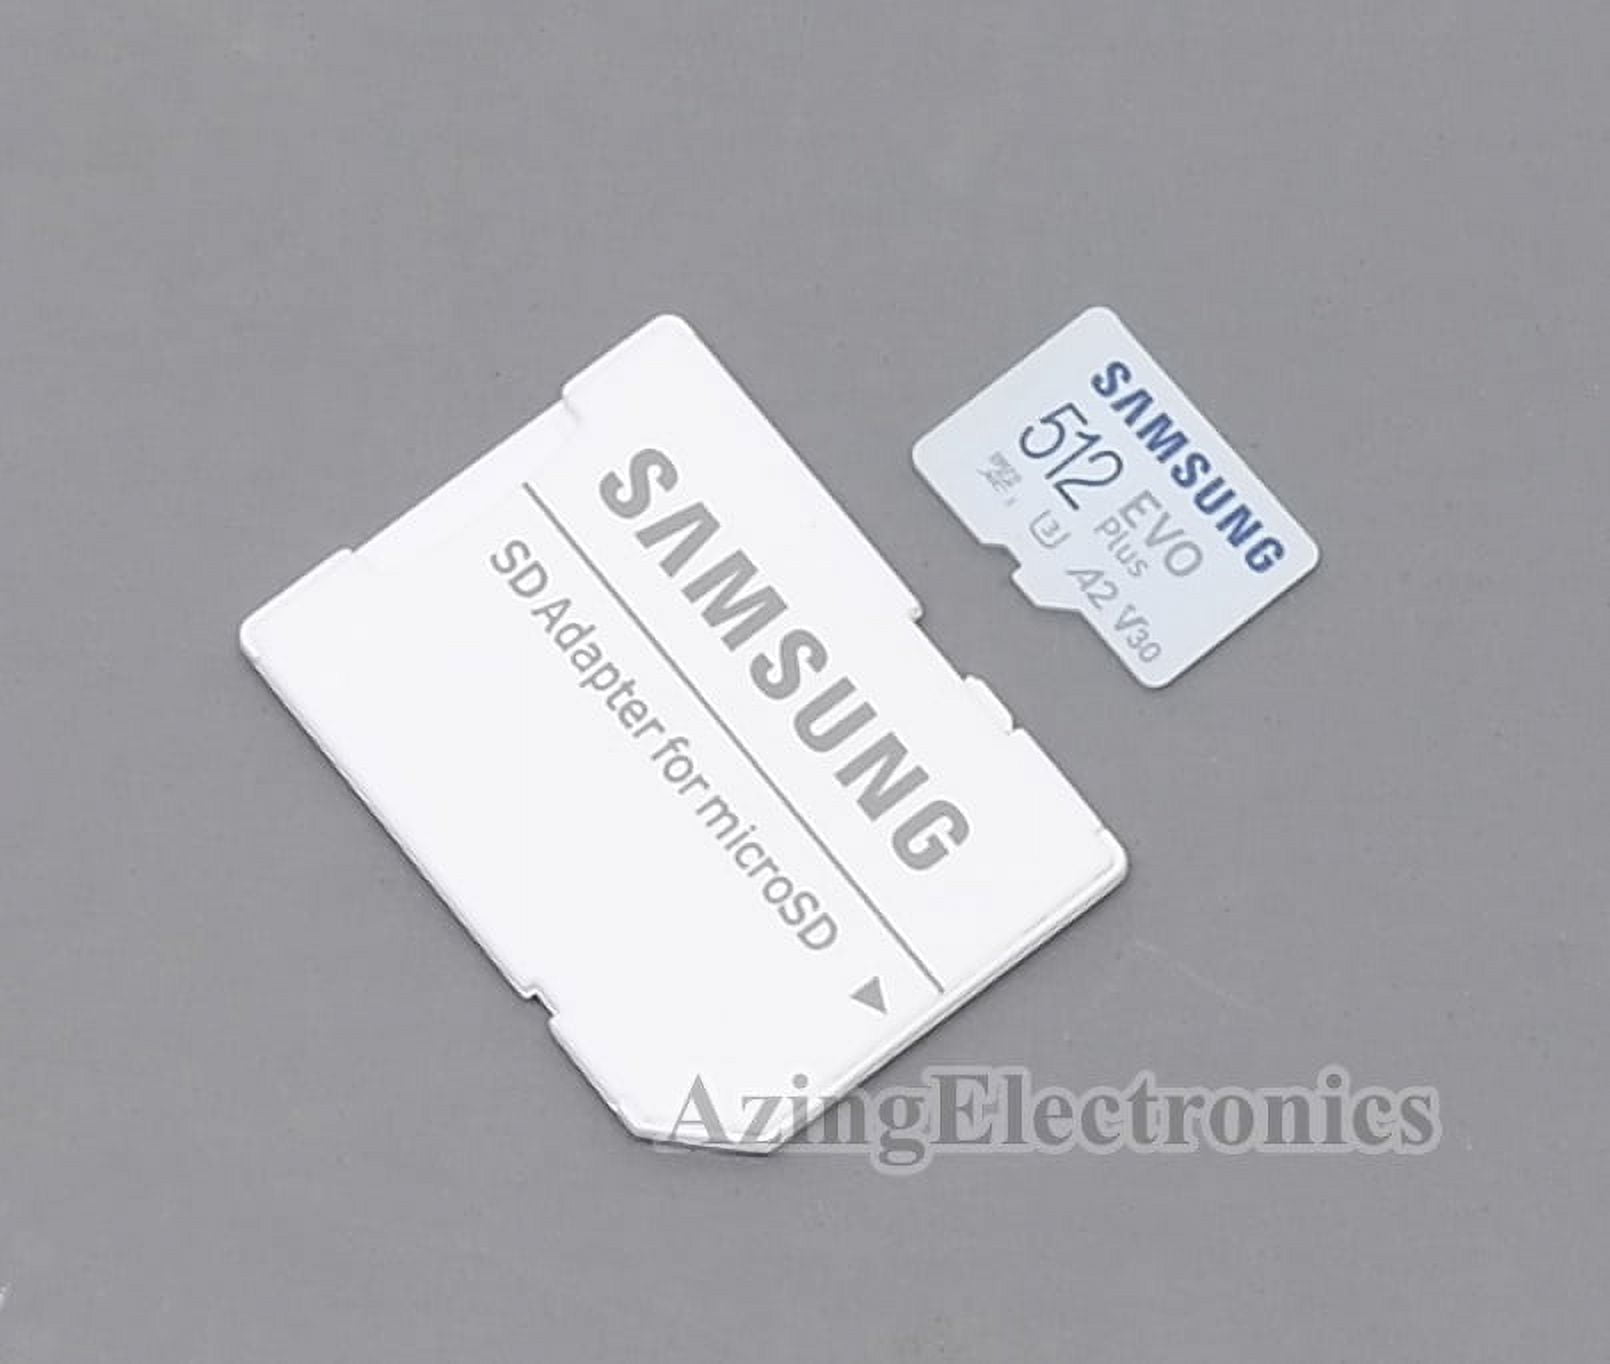 Carte microSD Evo Plus - 512 Go (MB-MC512KA/EU)